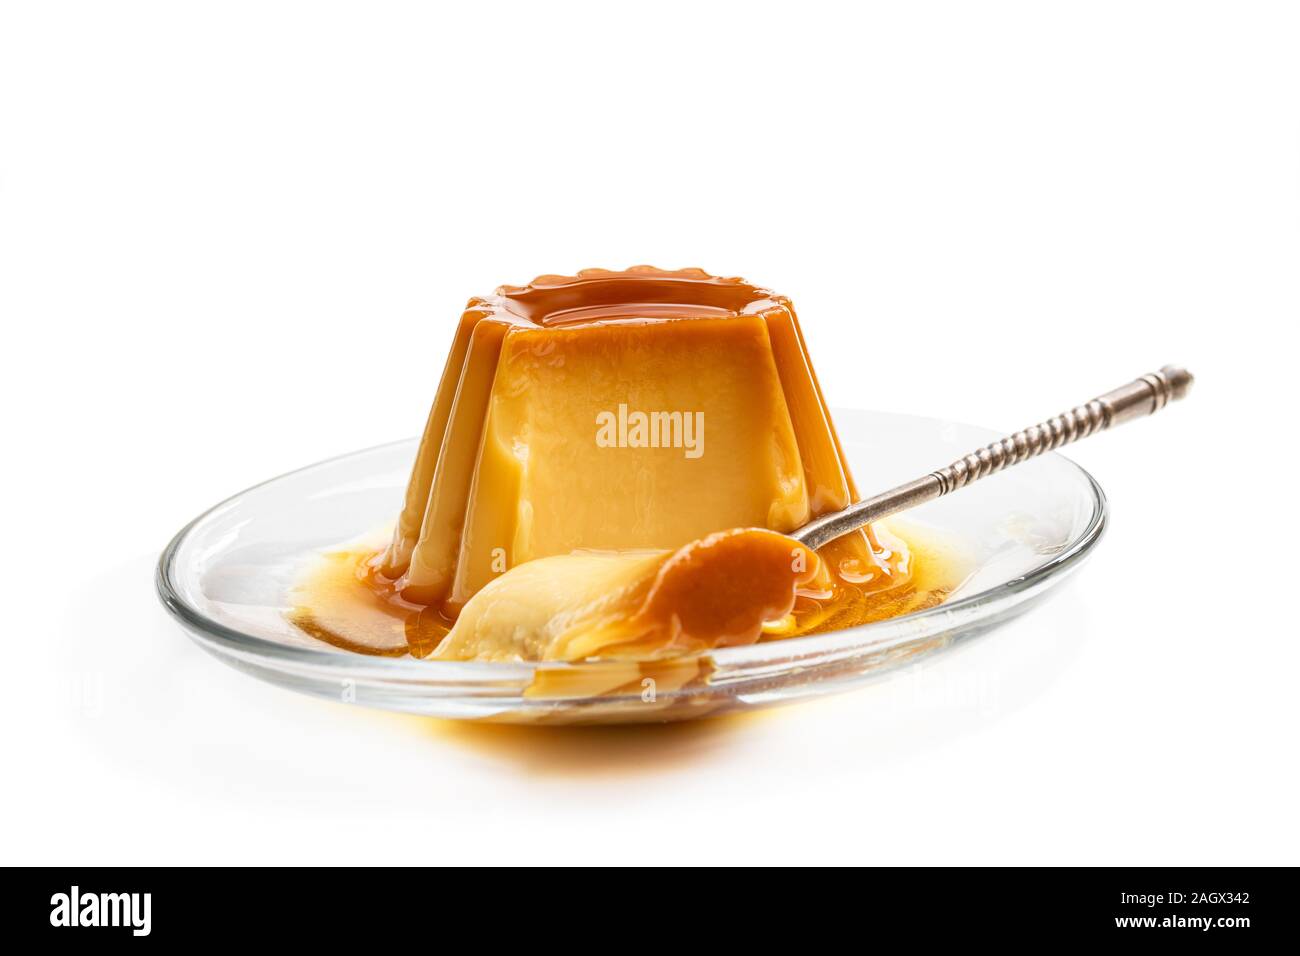 Creme caramel custard pudding isolated in white Stock Photo - Alamy